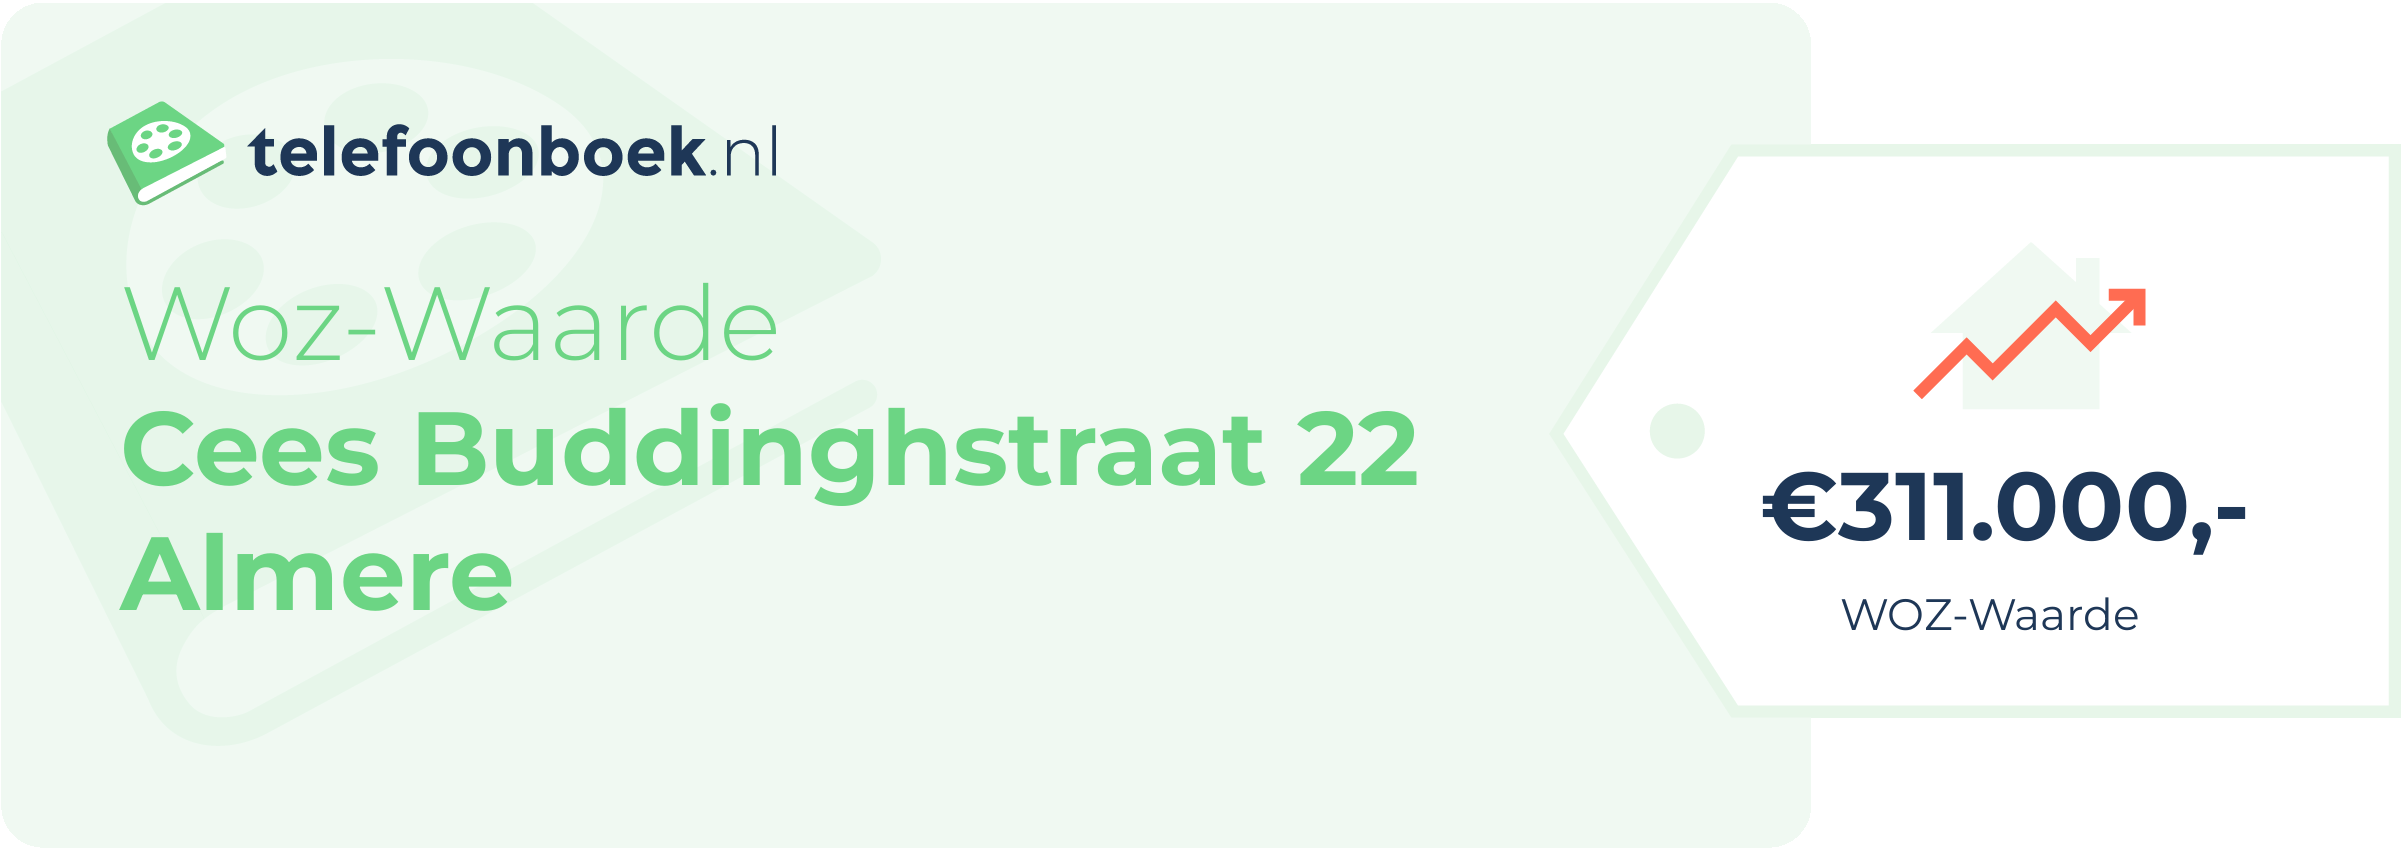 WOZ-waarde Cees Buddinghstraat 22 Almere